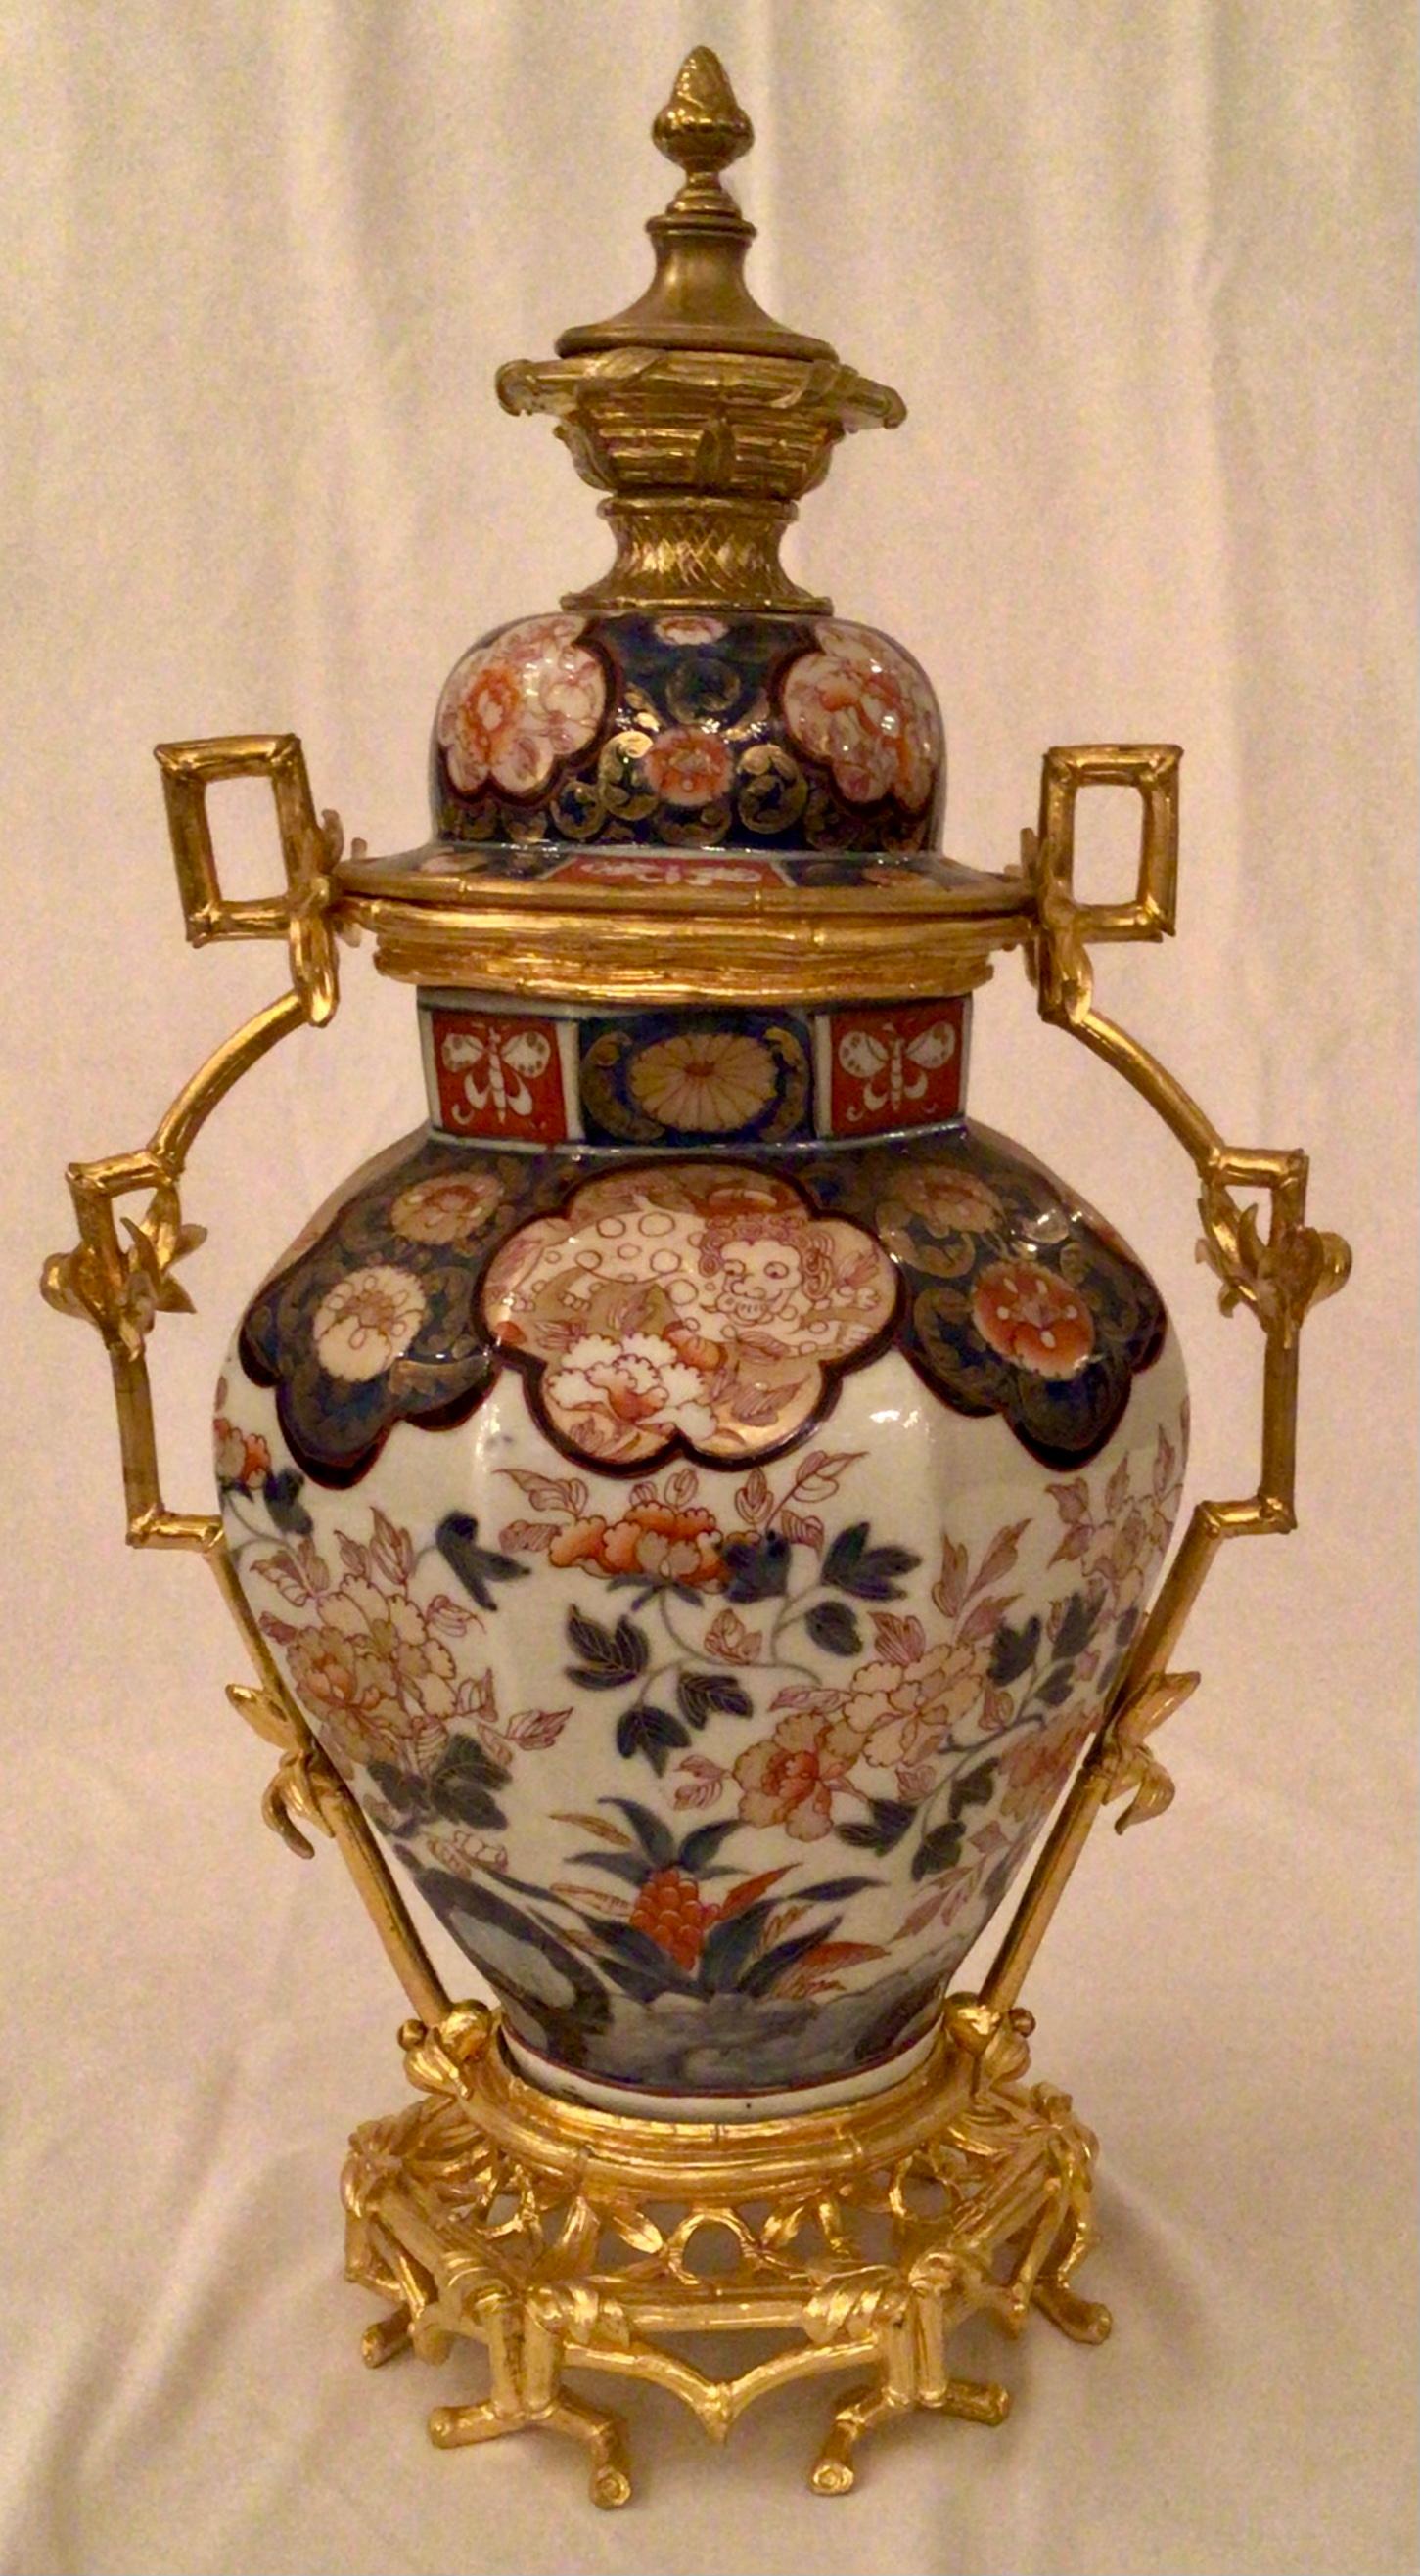 Pair of antique museum quality 19th century Imari porcelain urns with ormolu mounts, circa 1840-1860.
URN201.